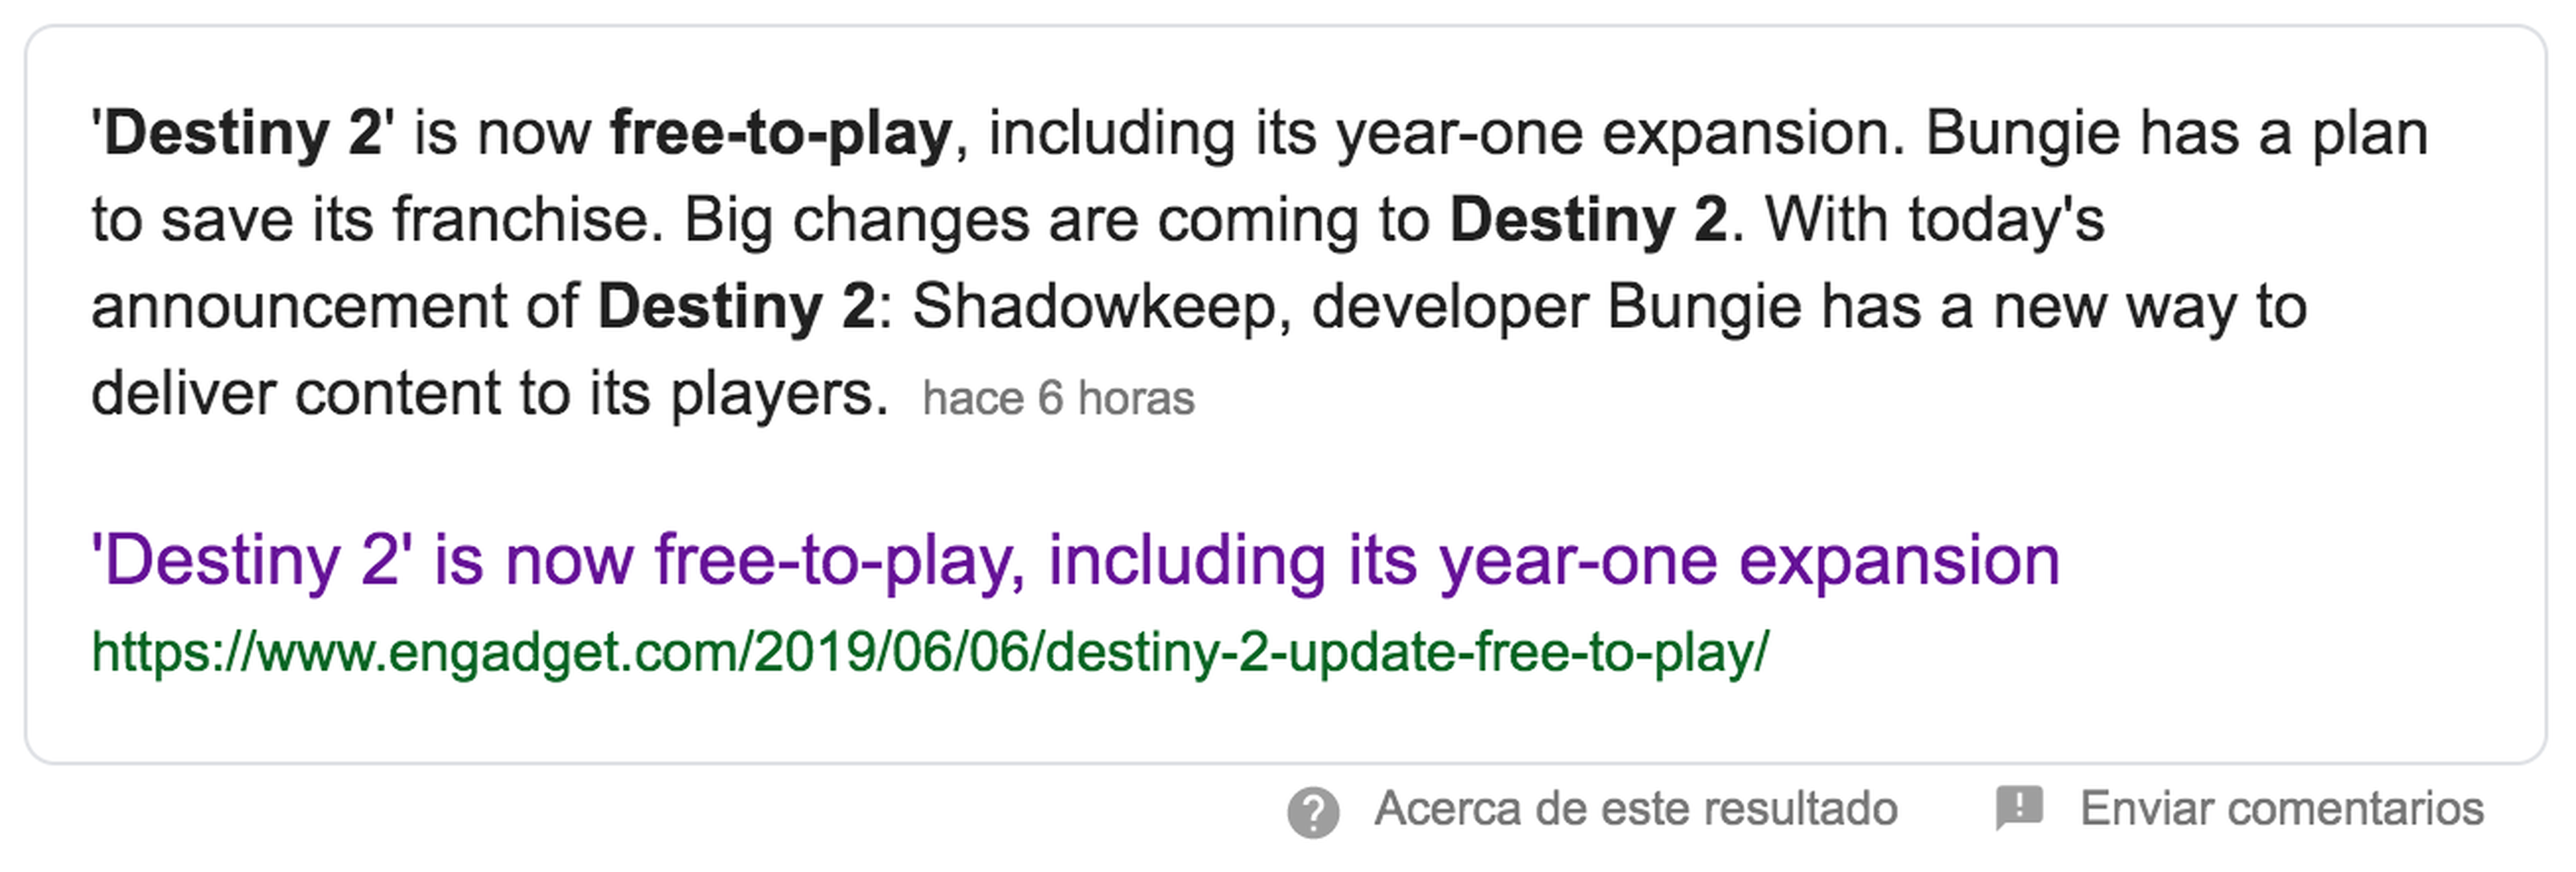 Destiny 2 free-to-play